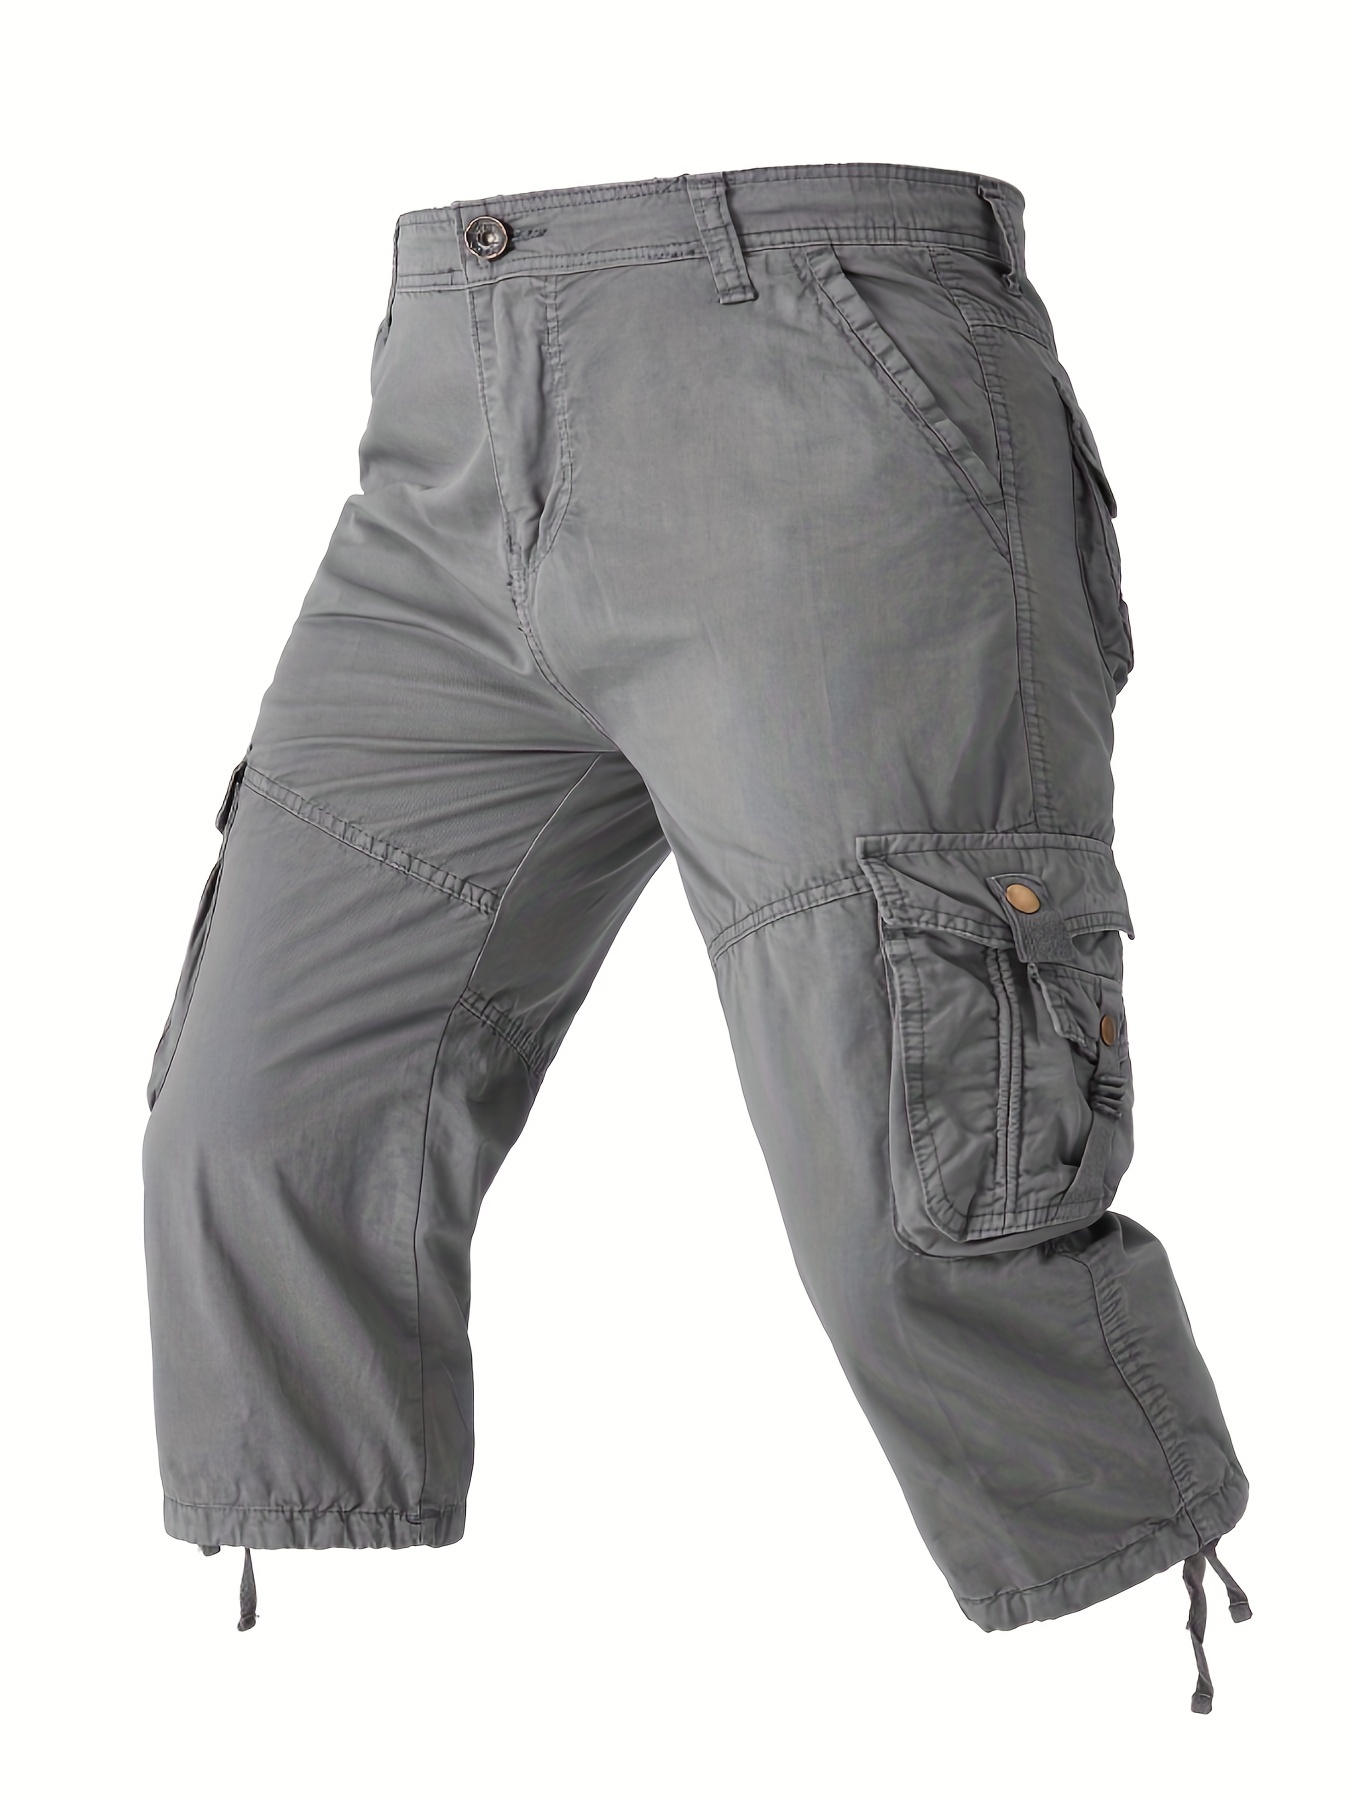 Mens 3/4 Length Capri Shorts Outdoor Hiking Cargo Work Pants Casual Summer  Wear